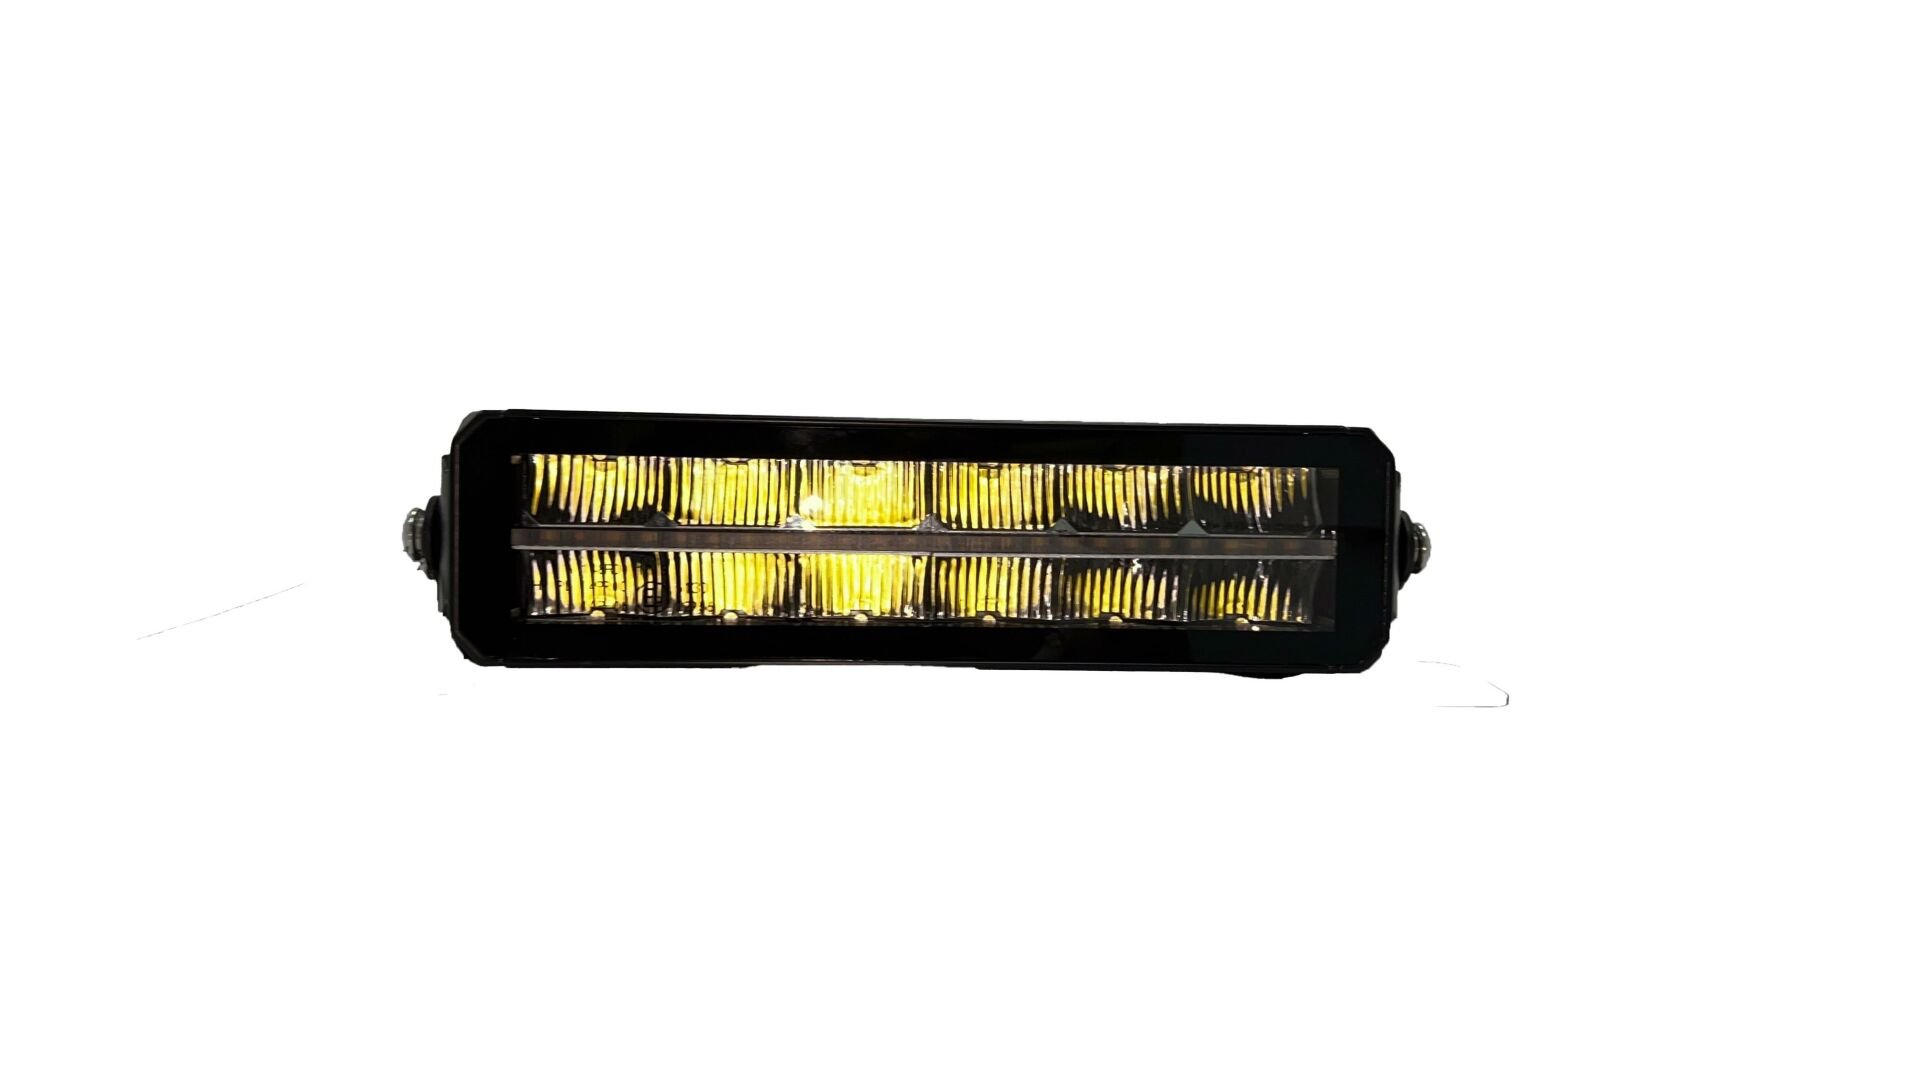 Demmon 30 Cm 60 W Gündüz LED li LED Bar